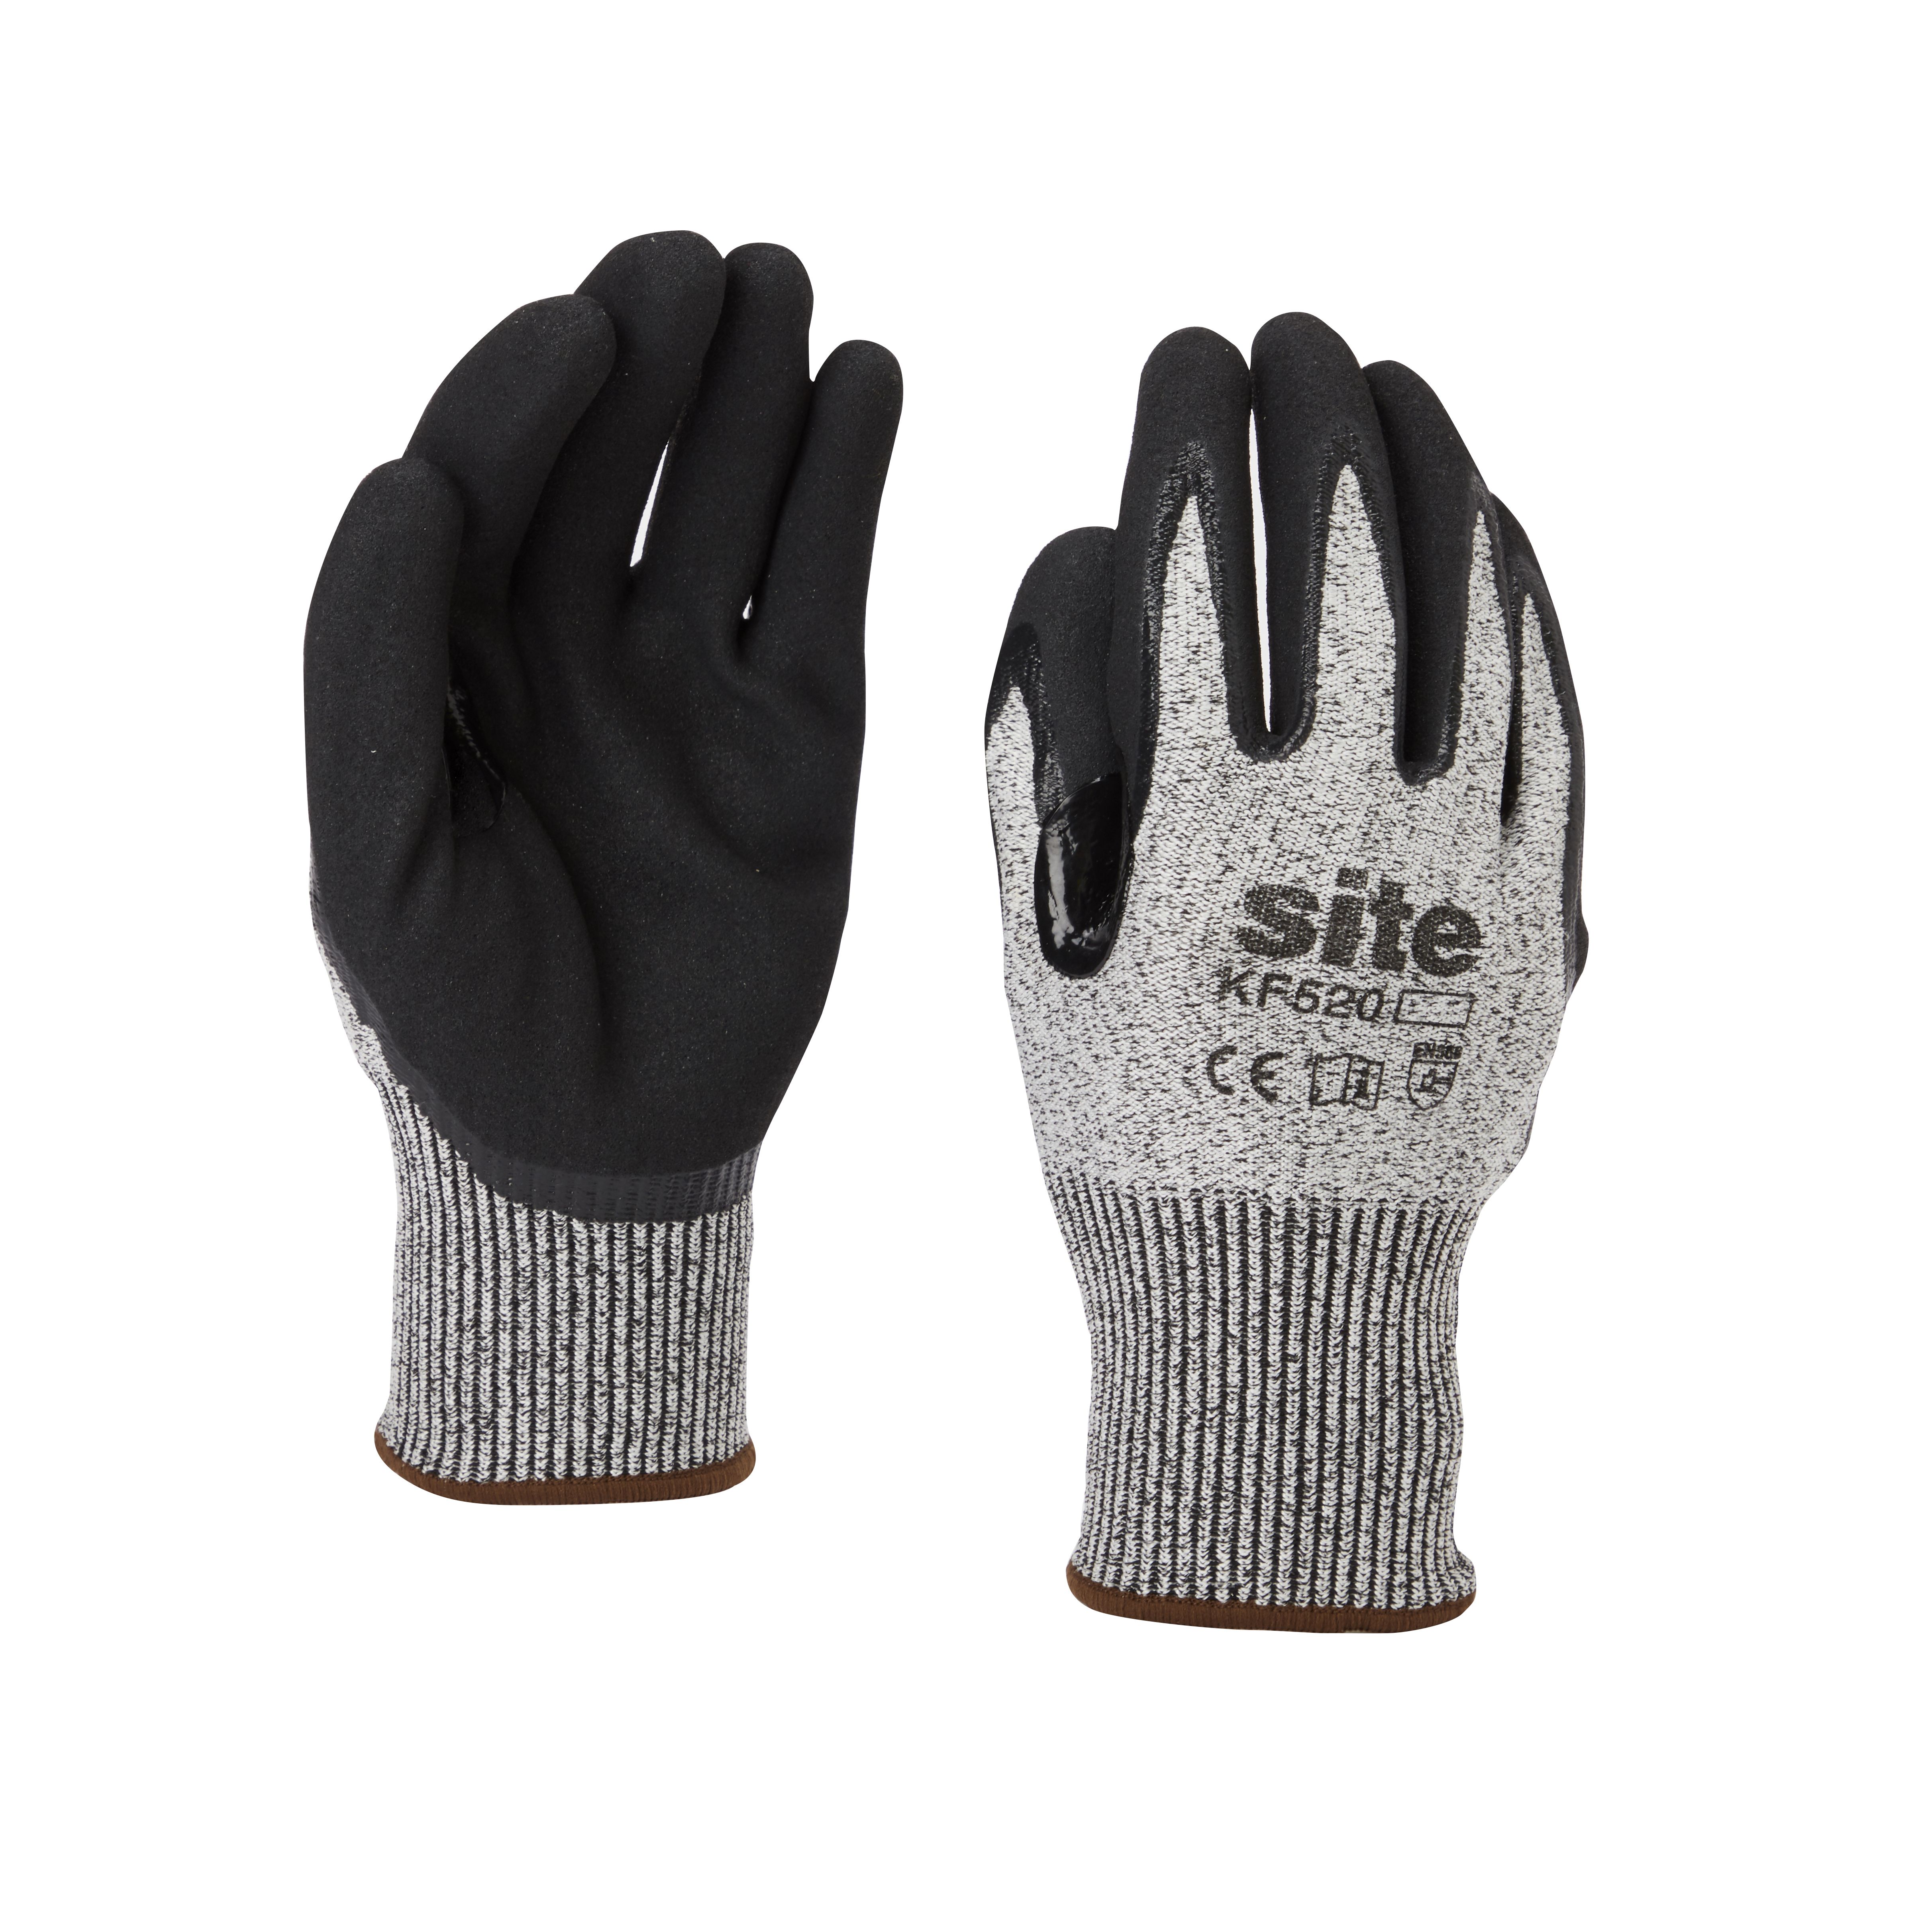 https://media.diy.com/is/image/Kingfisher/site-cut-resistant-gloves-large~3663602671701_02c_bq?$MOB_PREV$&$width=768&$height=768